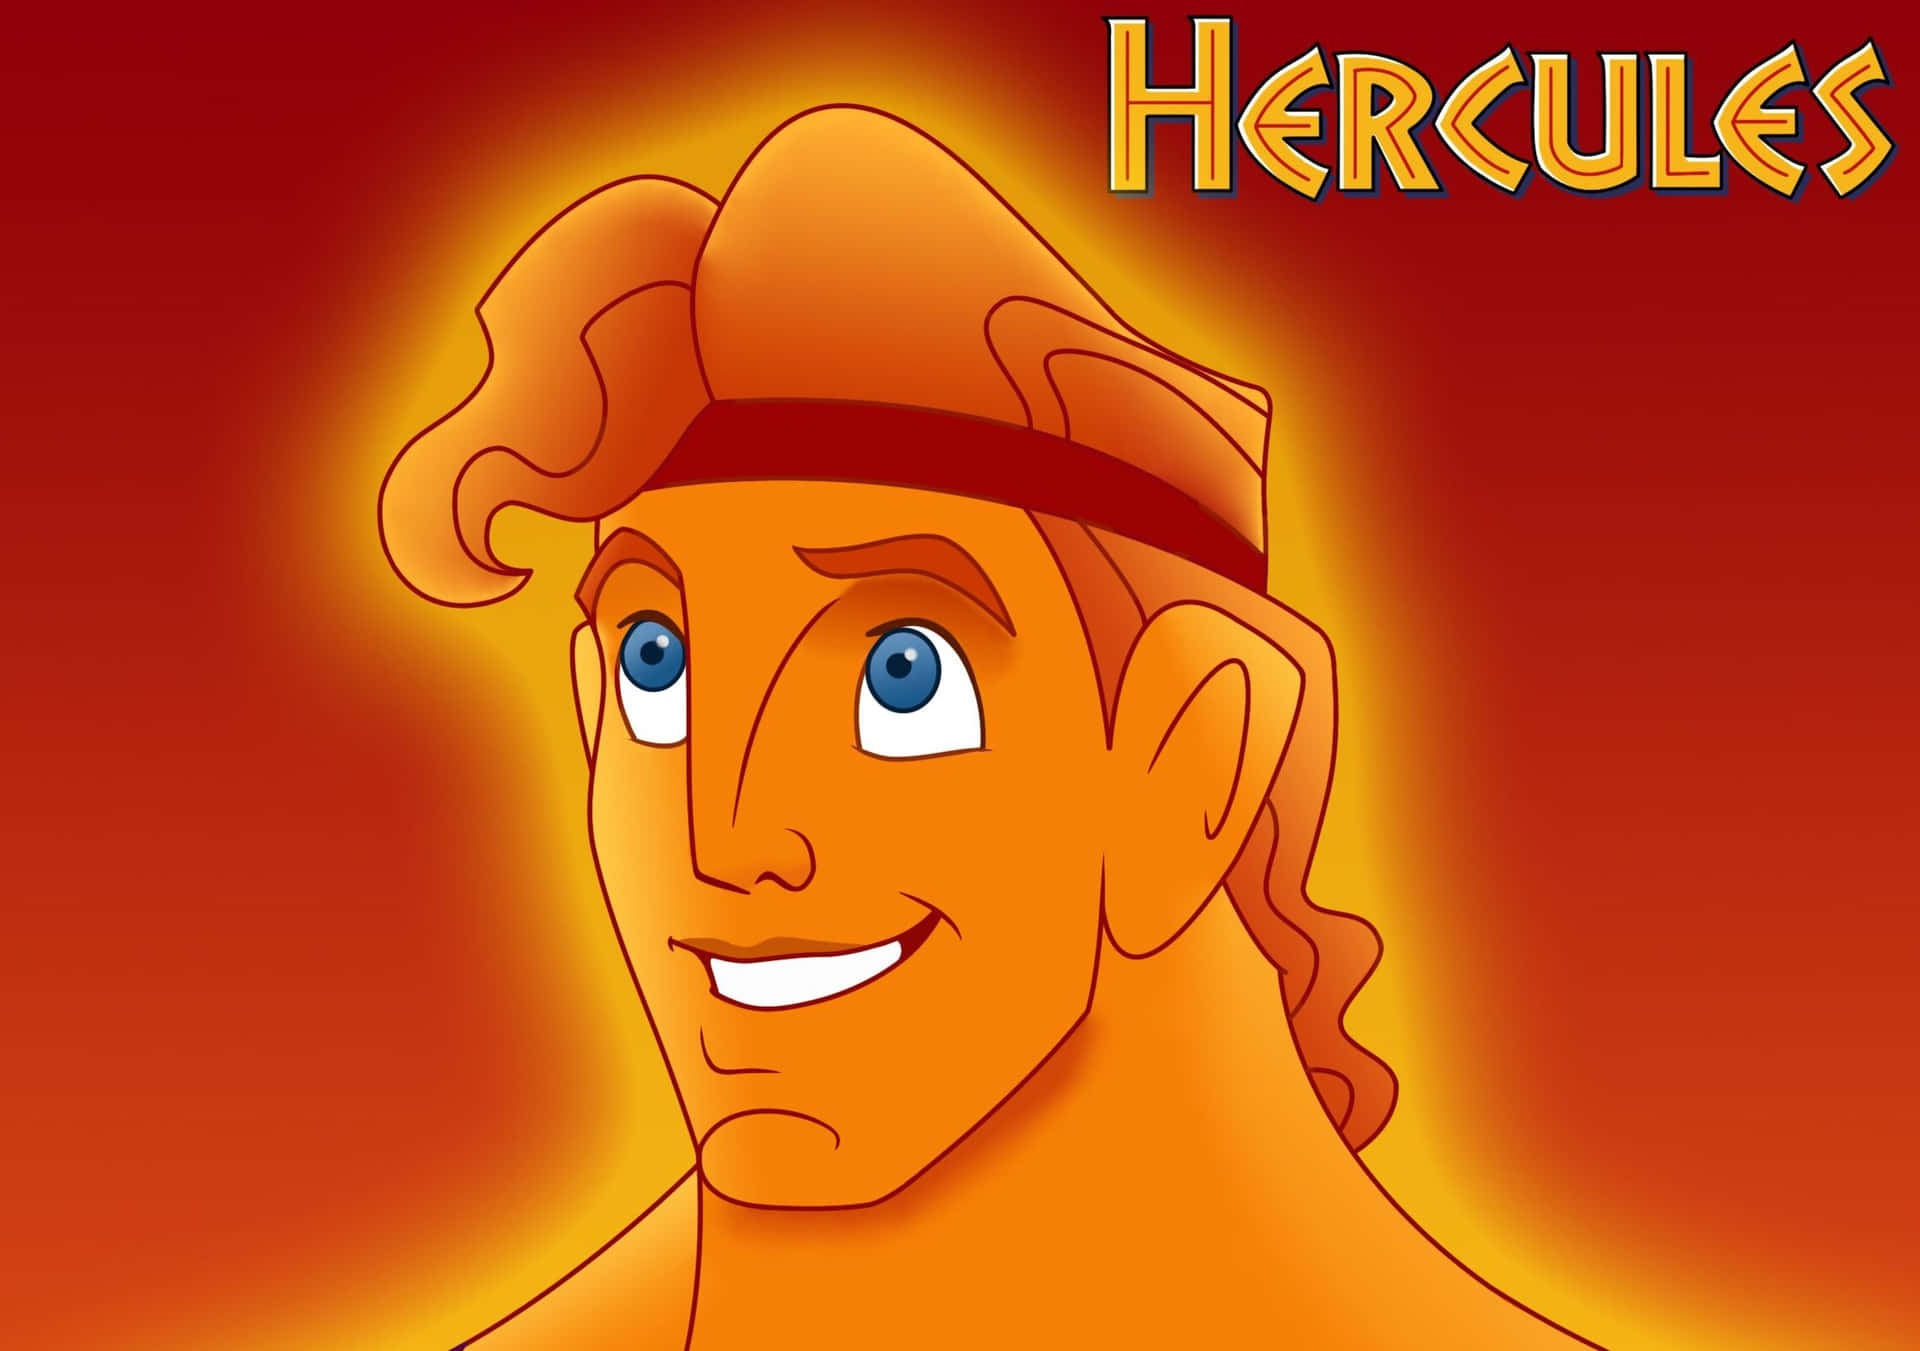 Hercules - The Animated Movie